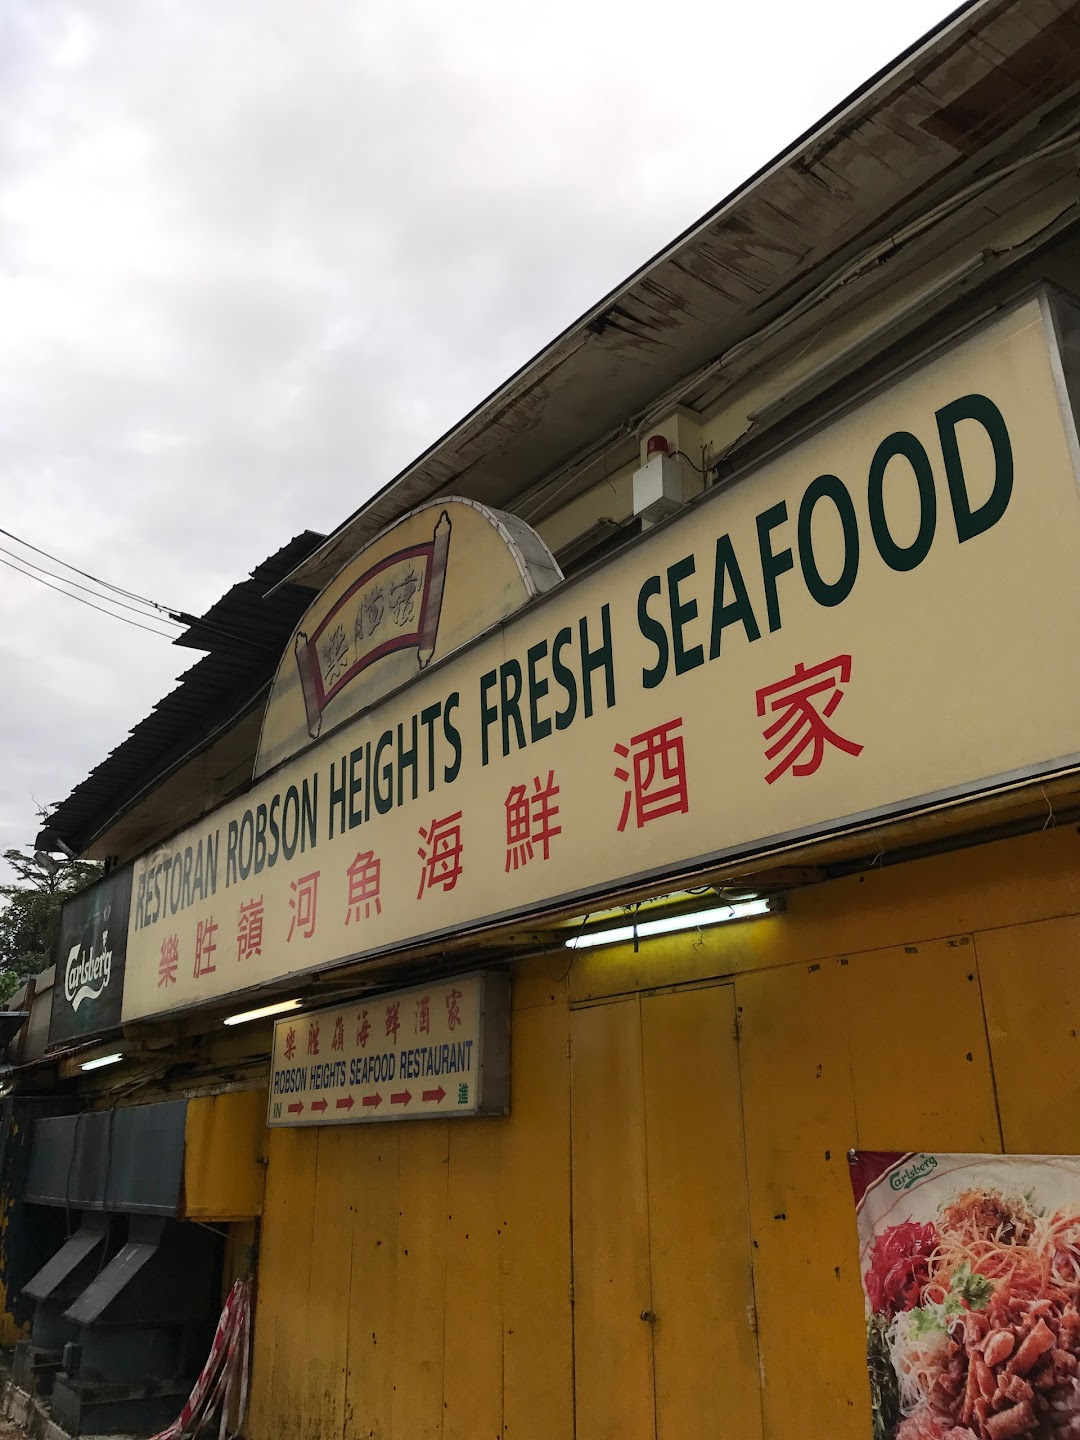 Robson Heights Seafood Restaurant